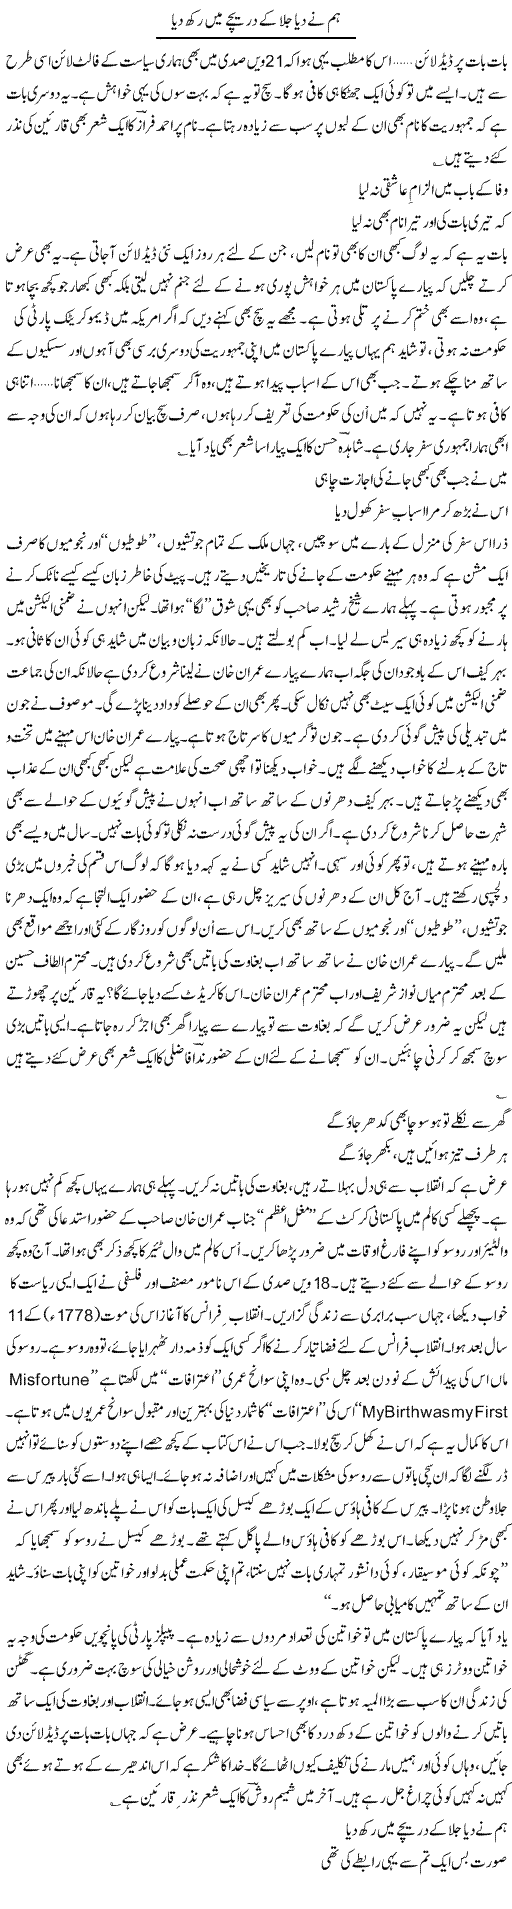 Pakistani Democracy Express Column Ijaz Abdul Hafeez 21 June 2011